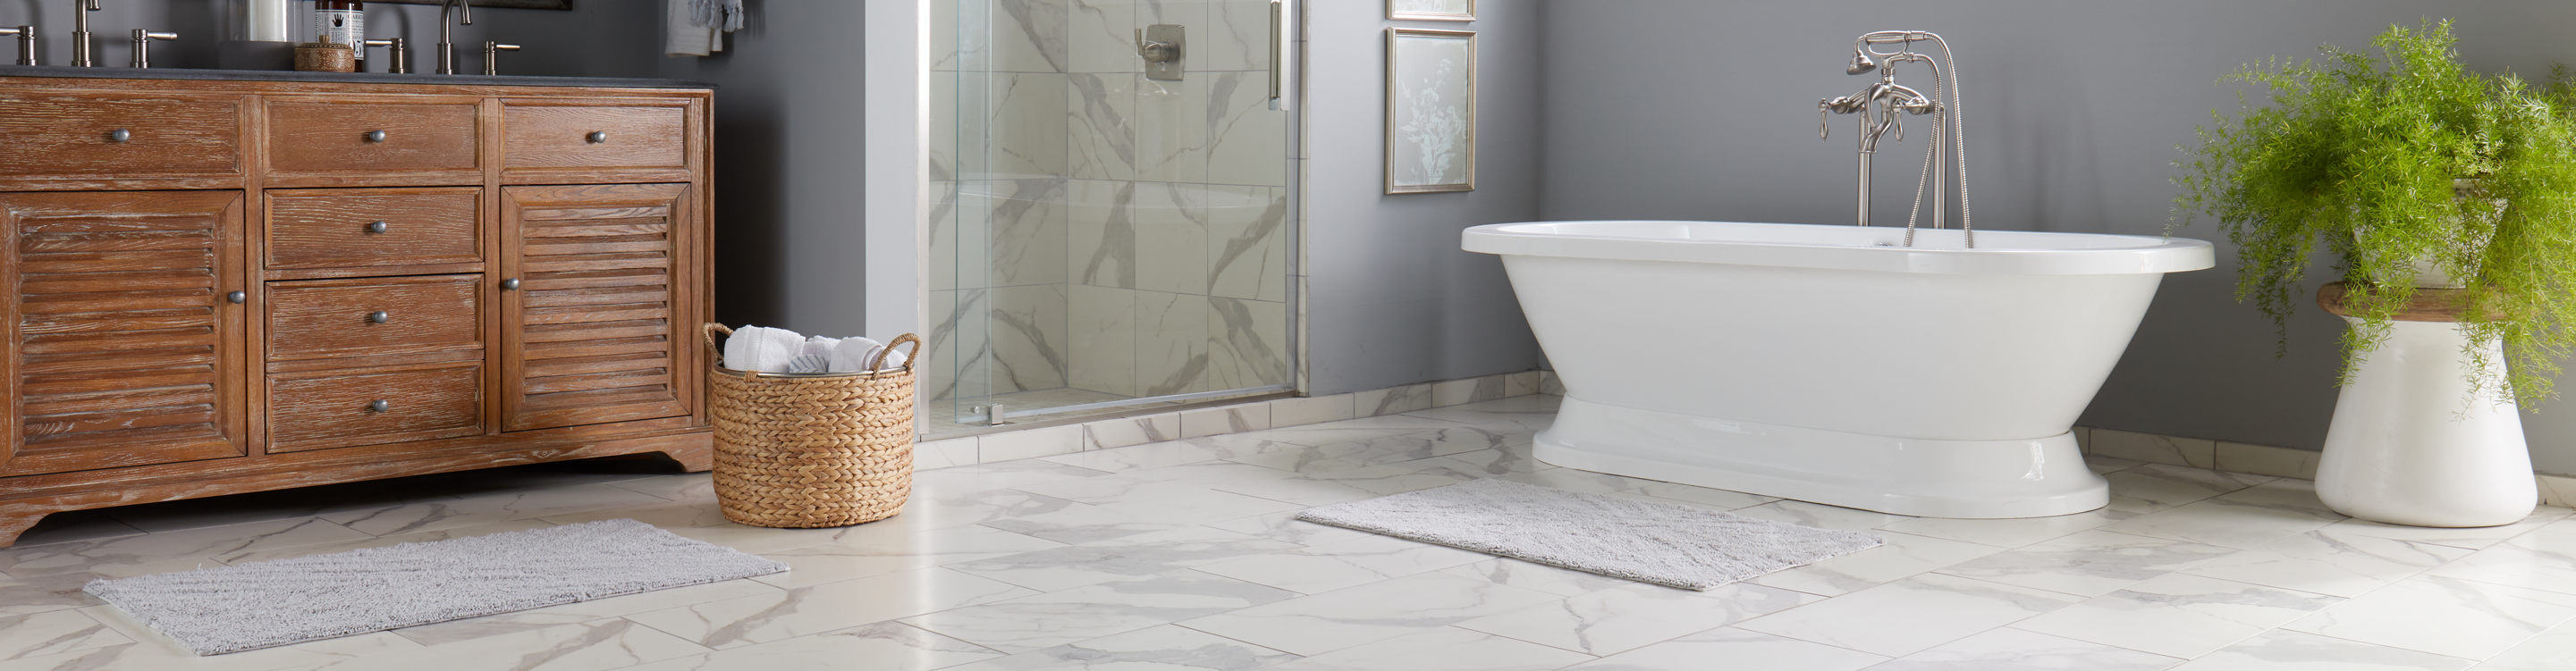 Stone look tile flooring marble floors in bathroom with soaker tub and walk-in shower